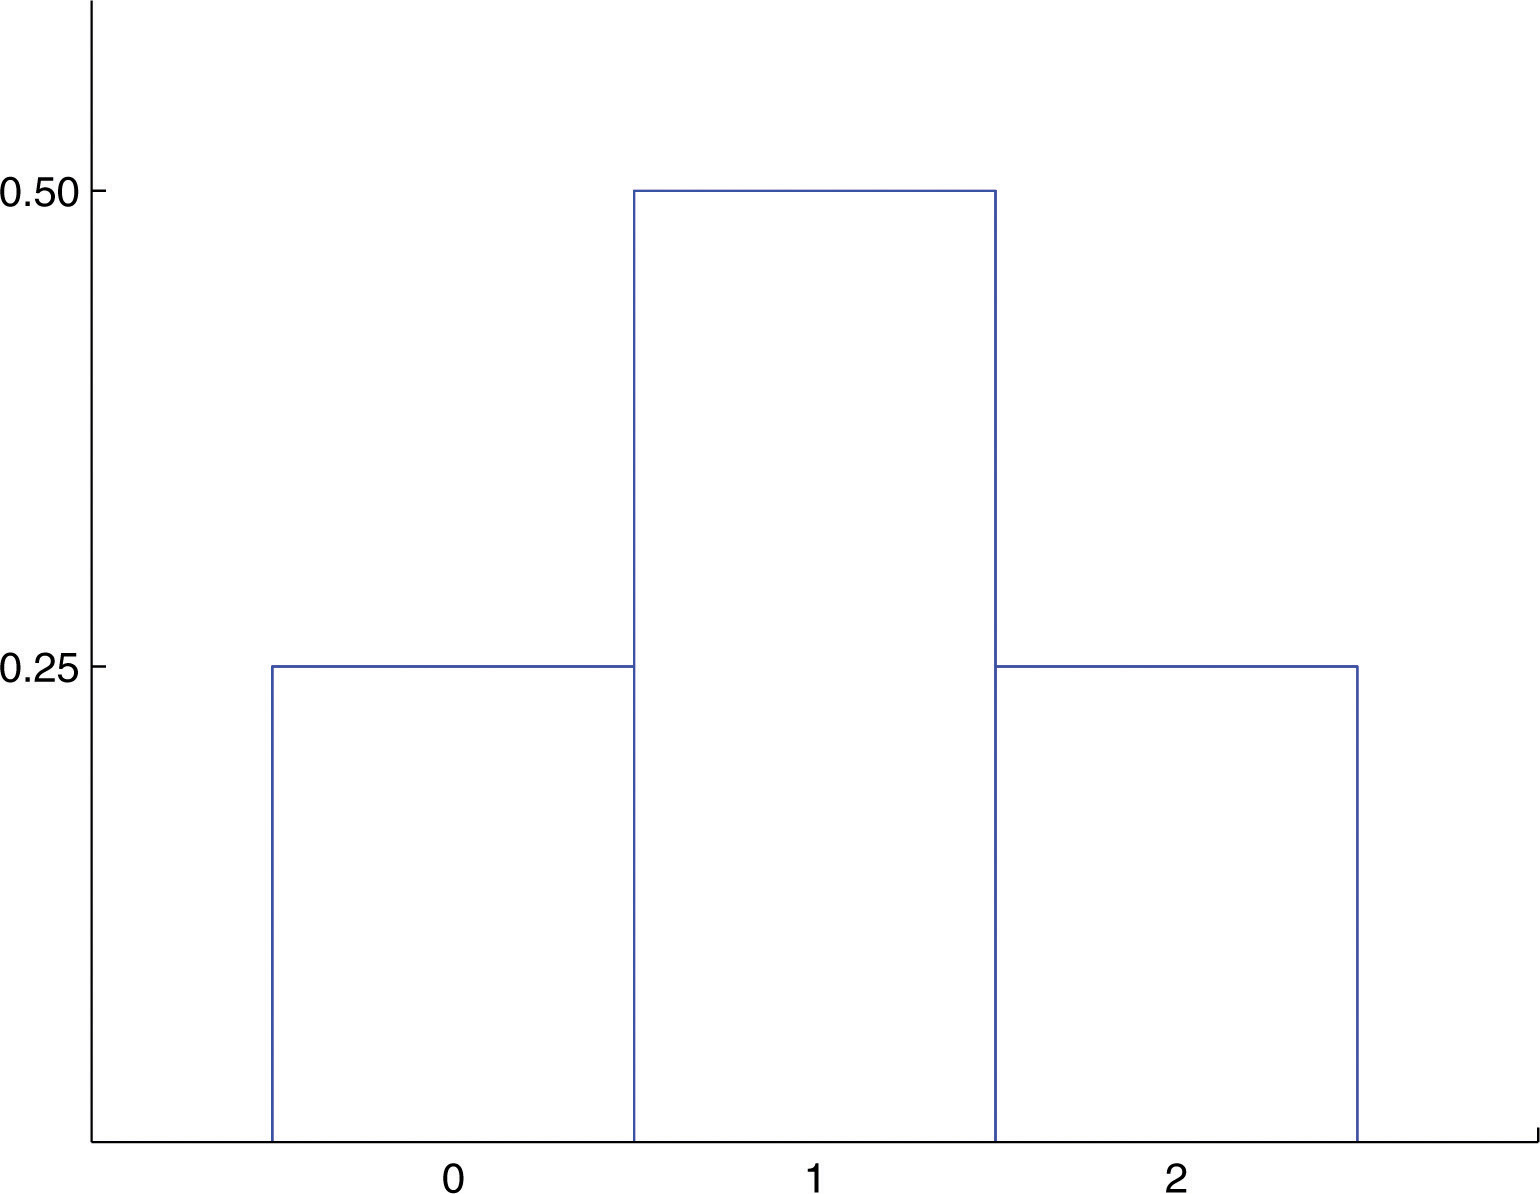 Probability Distributions For Discrete Random Variables